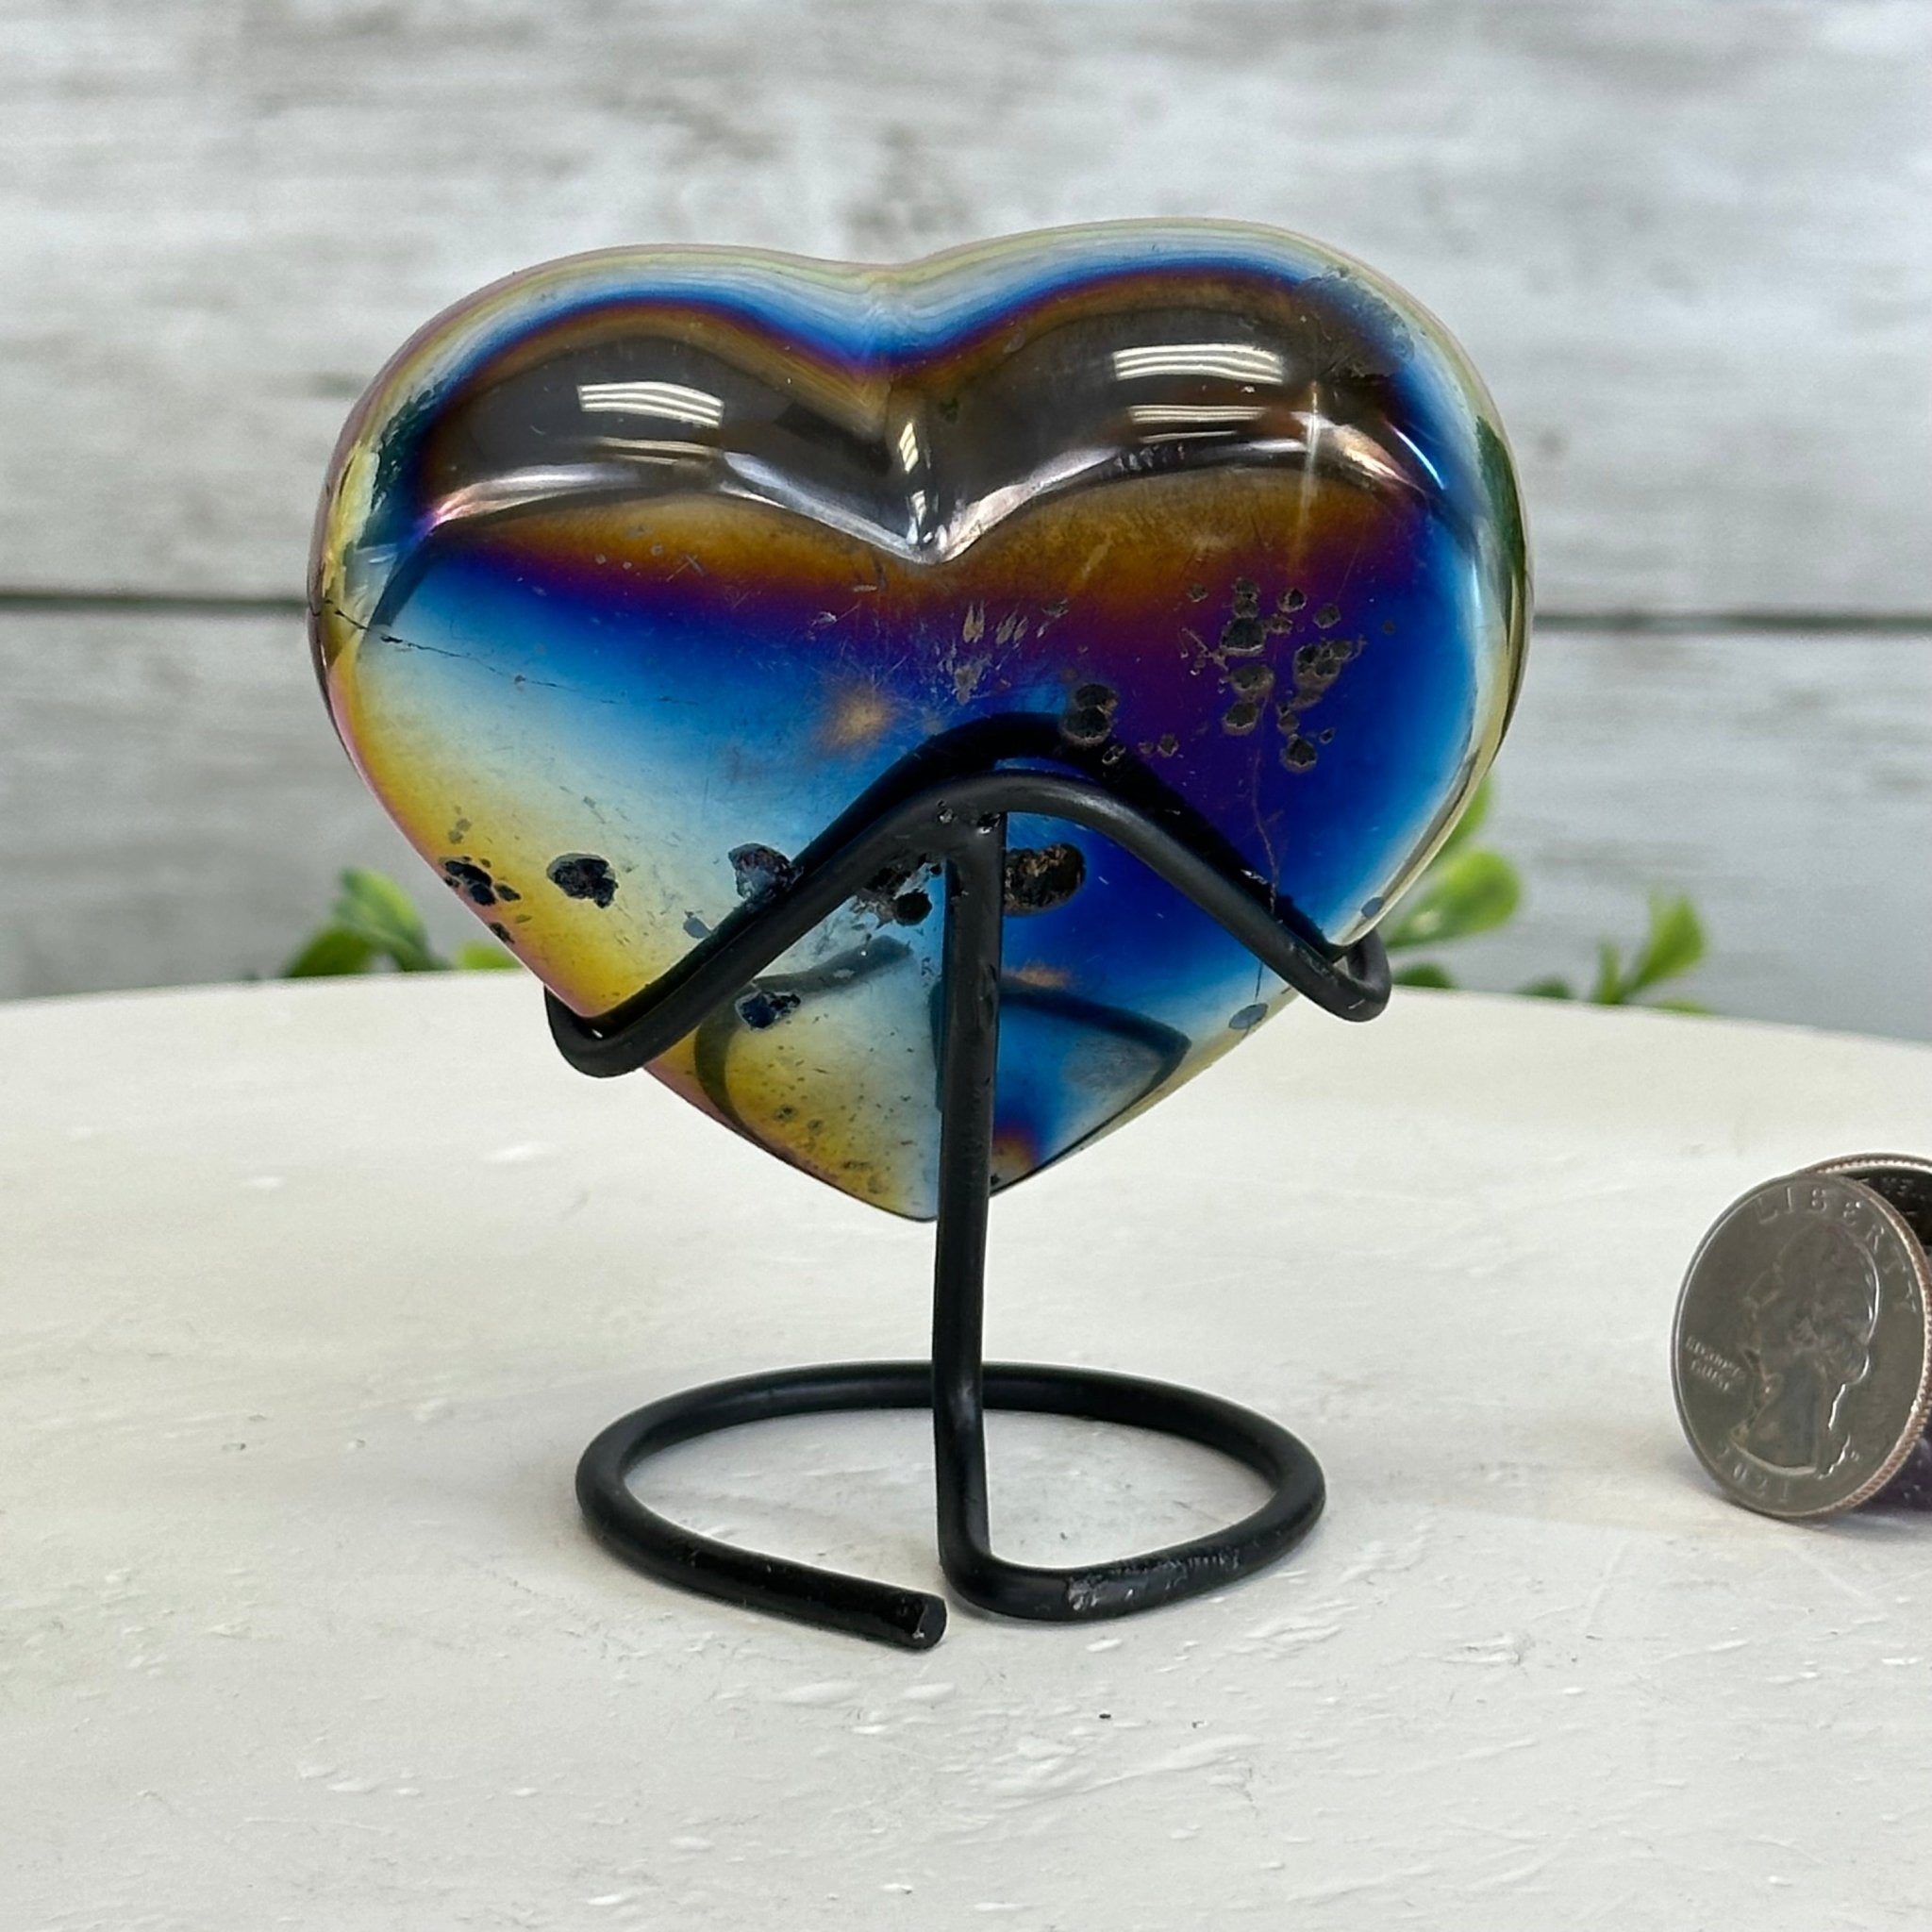 Rainbow Aura Amethyst Heart on a Metal Stand, 0.6 lbs & 3.6" Tall #5463RA-018 - Brazil GemsBrazil GemsRainbow Aura Amethyst Heart on a Metal Stand, 0.6 lbs & 3.6" Tall #5463RA-018Hearts5463RA-018